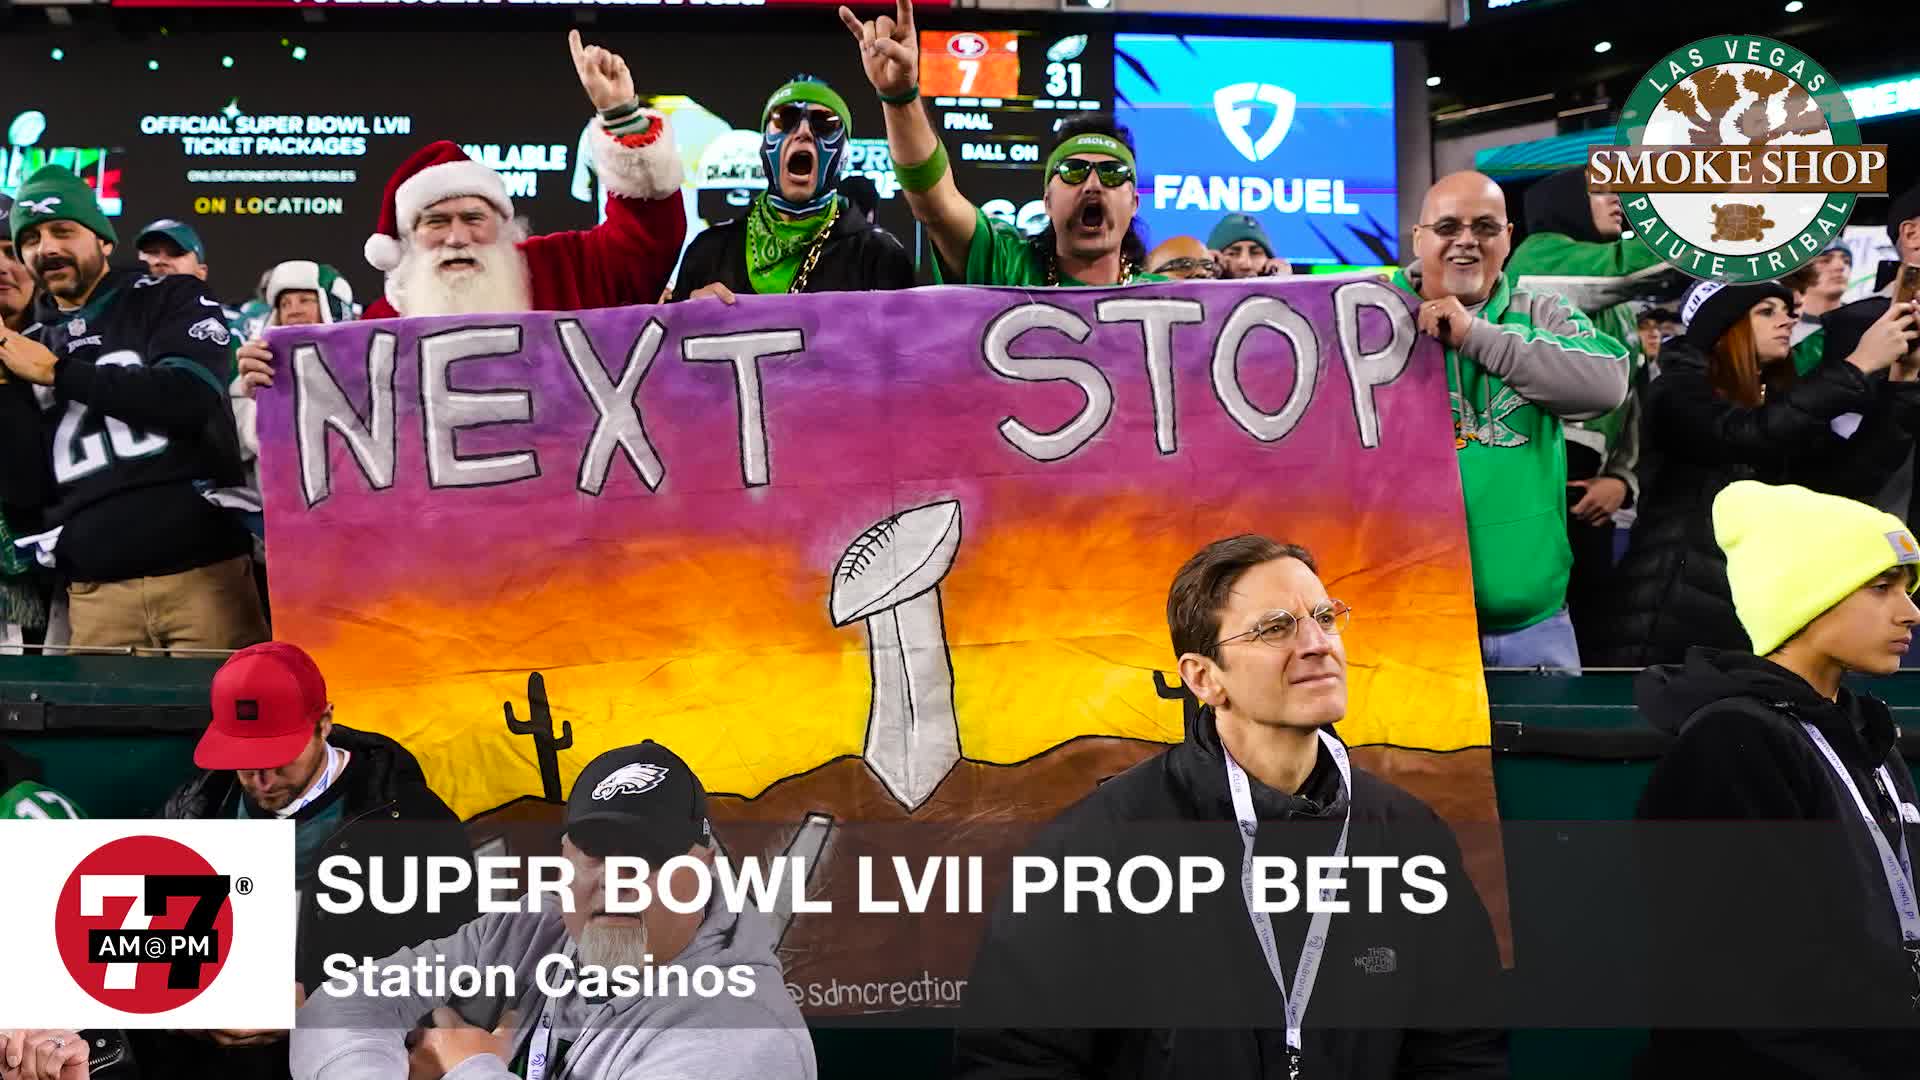 Super Bowl LVII prop bets